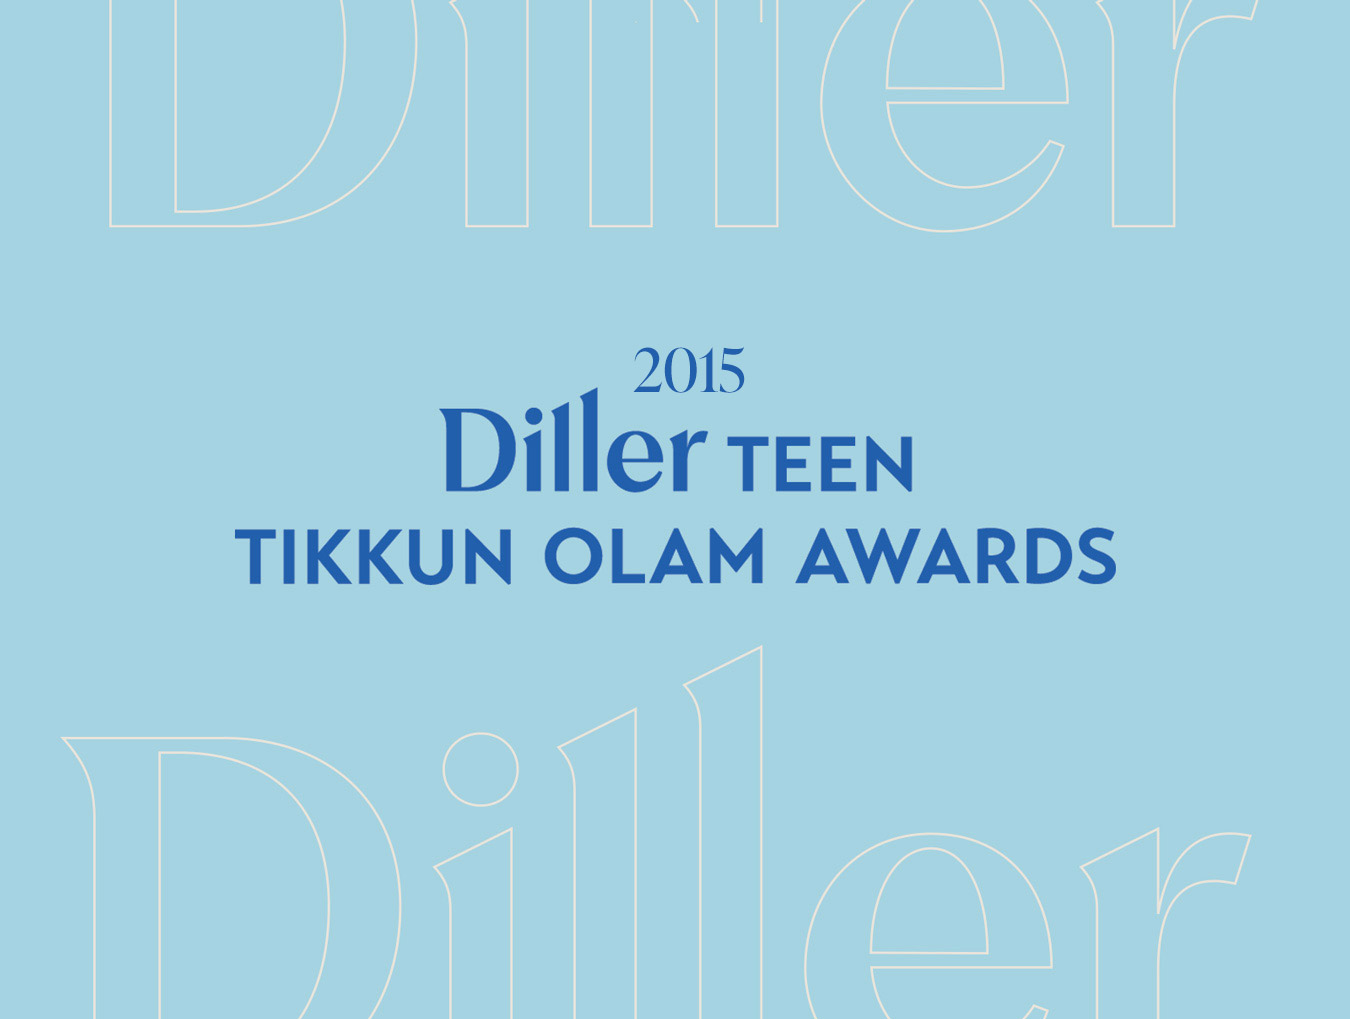 2015 Diller Teen Tikkun Olam Awards video